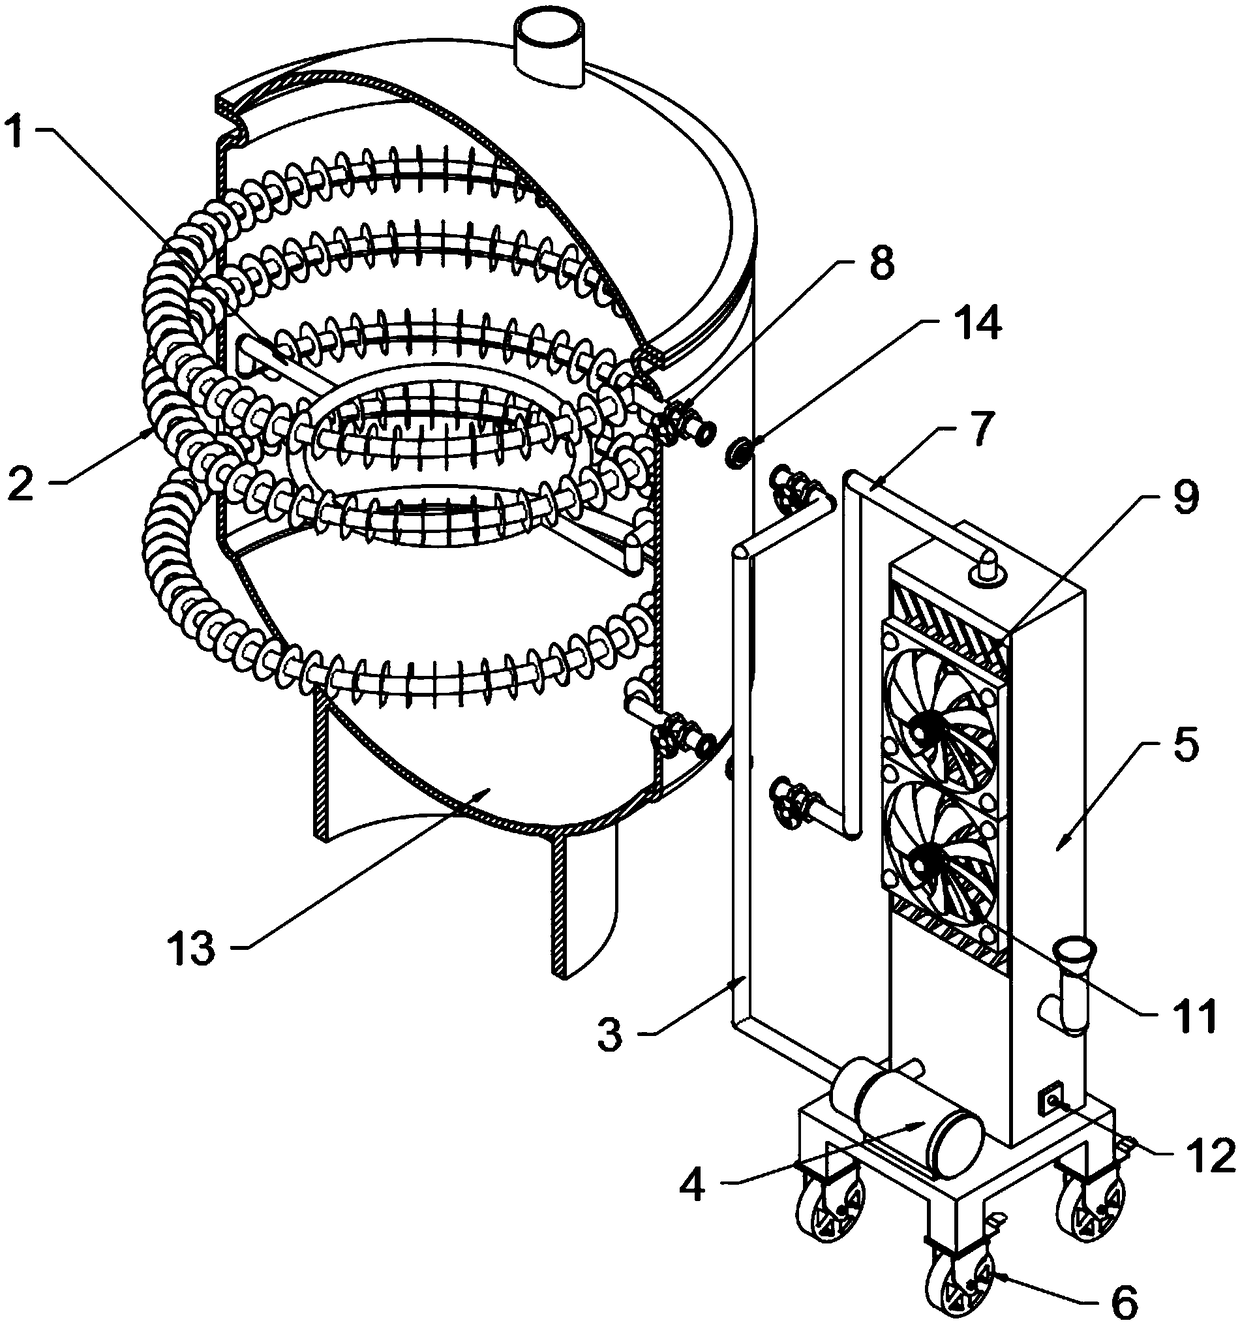 Heat exchange device of universal-type fermentation tank